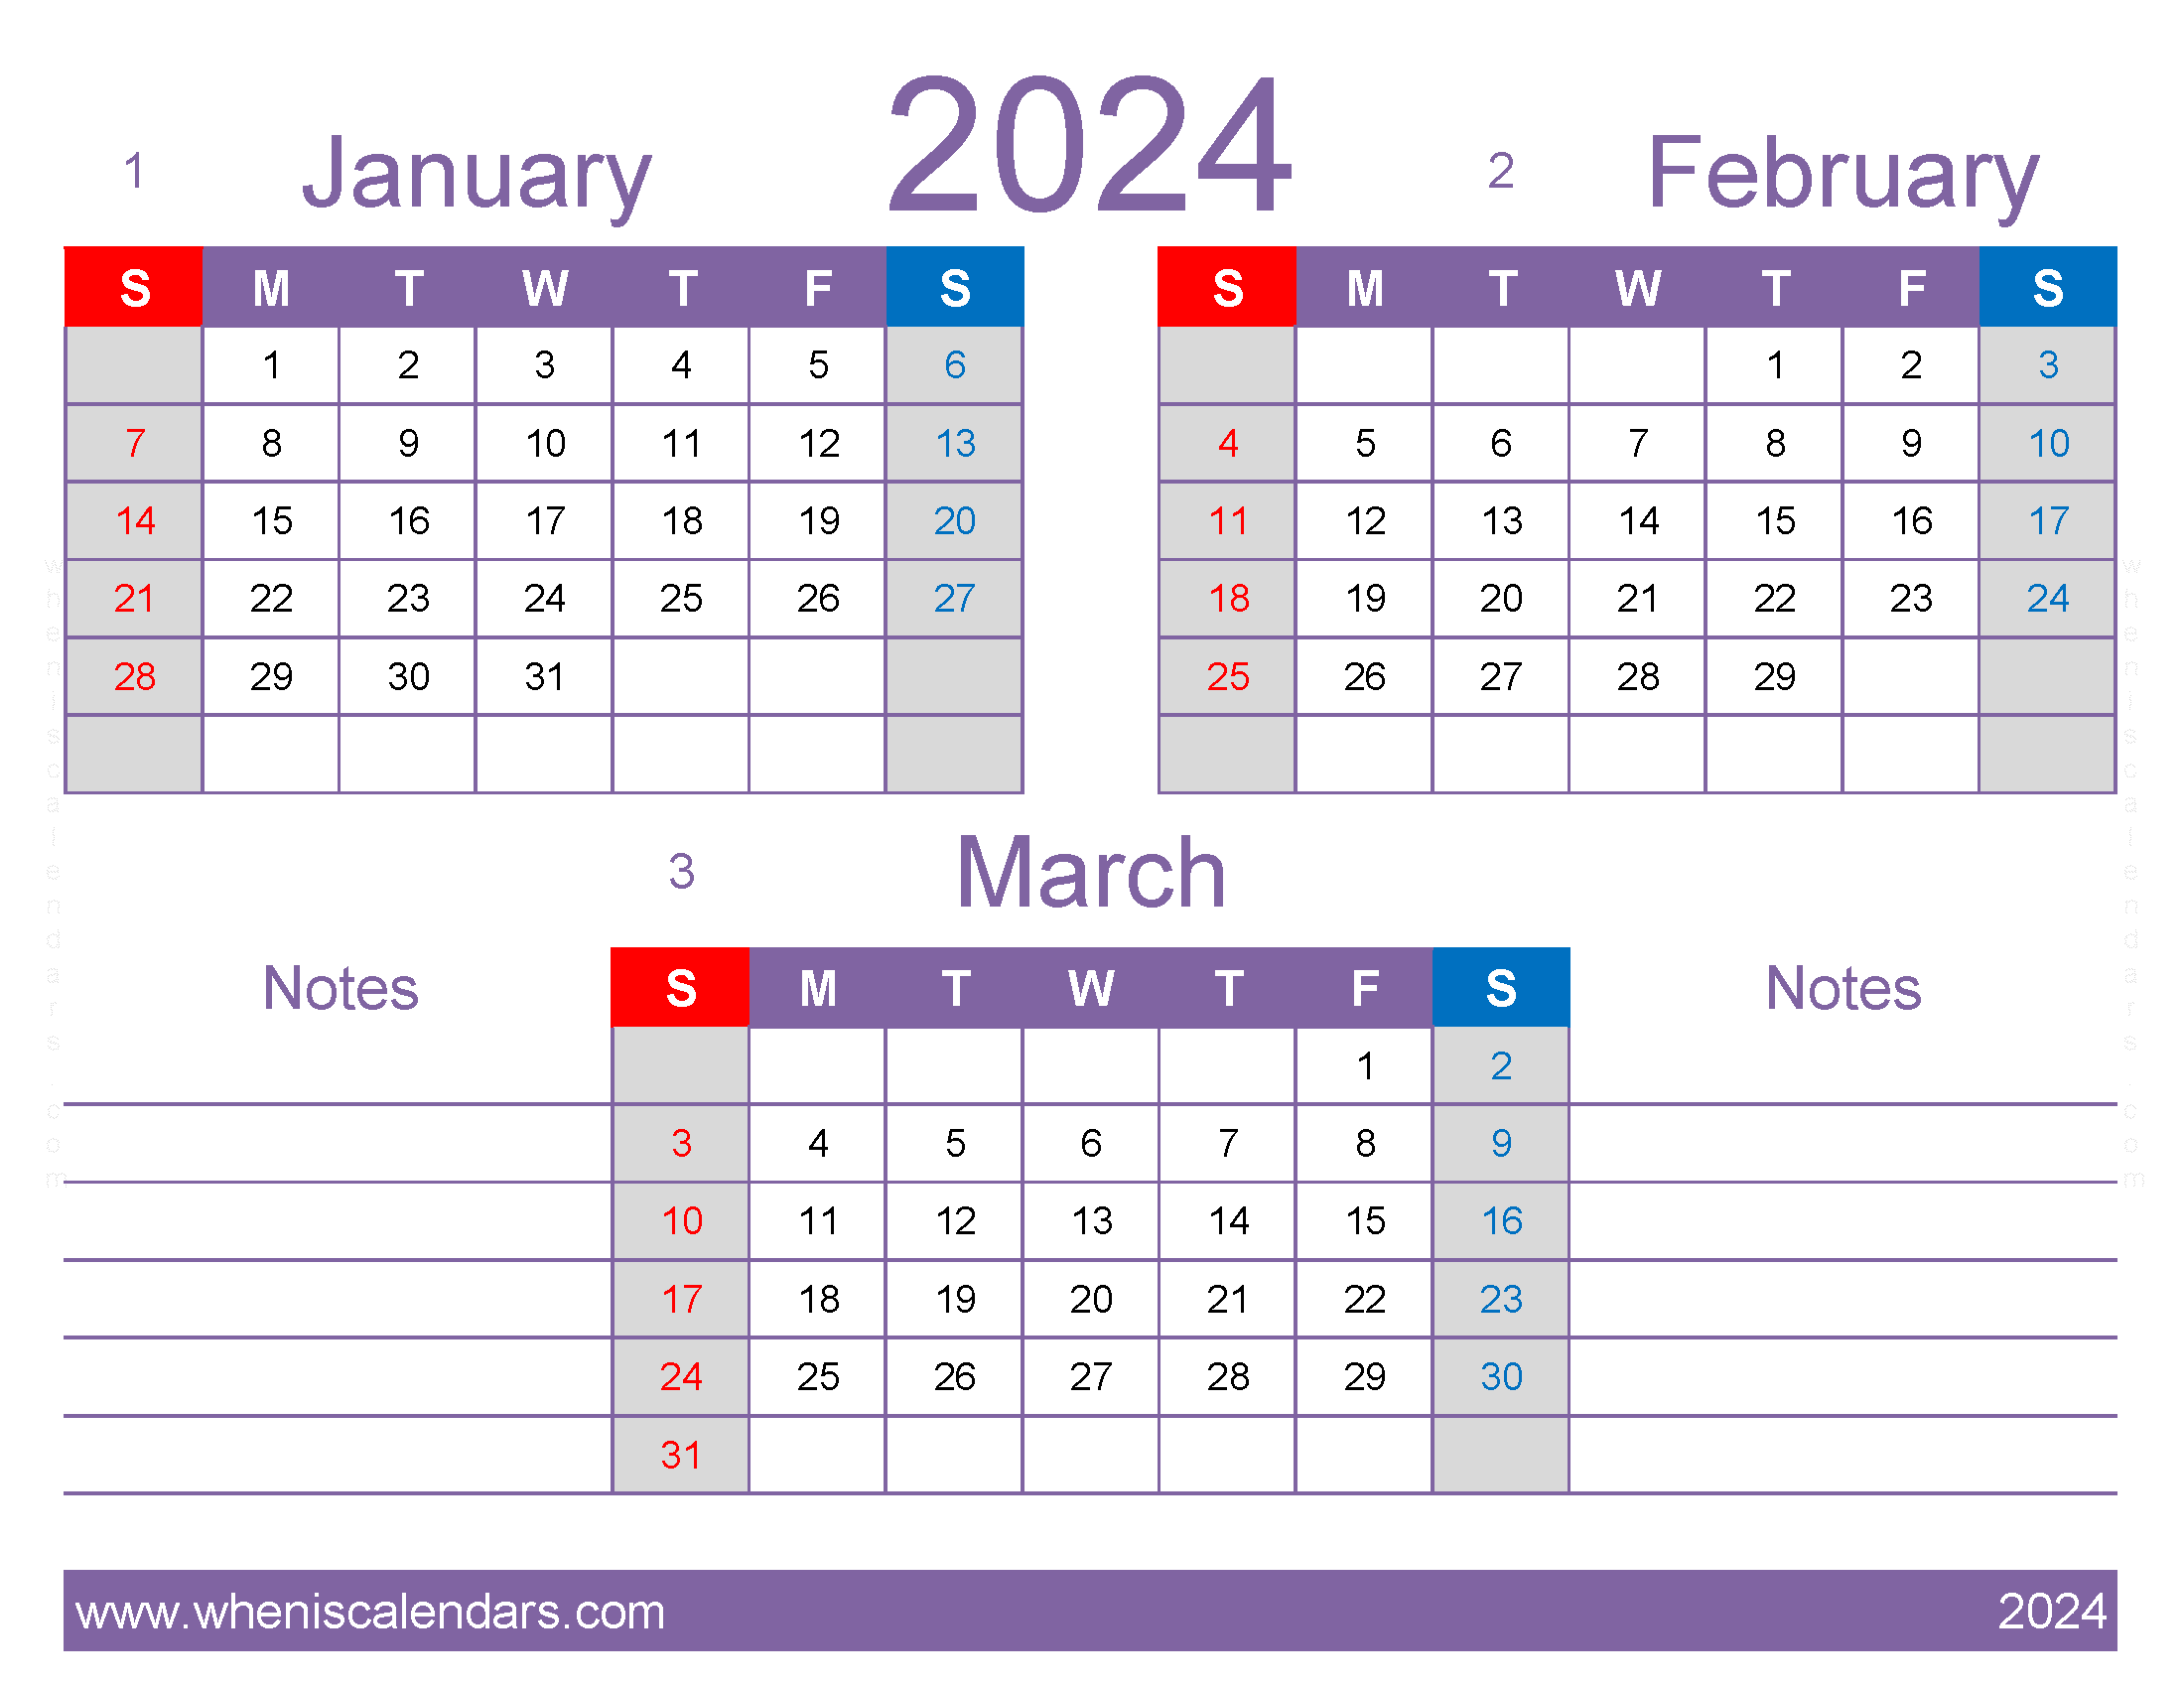 Download January through March calendar 2024 JFM434